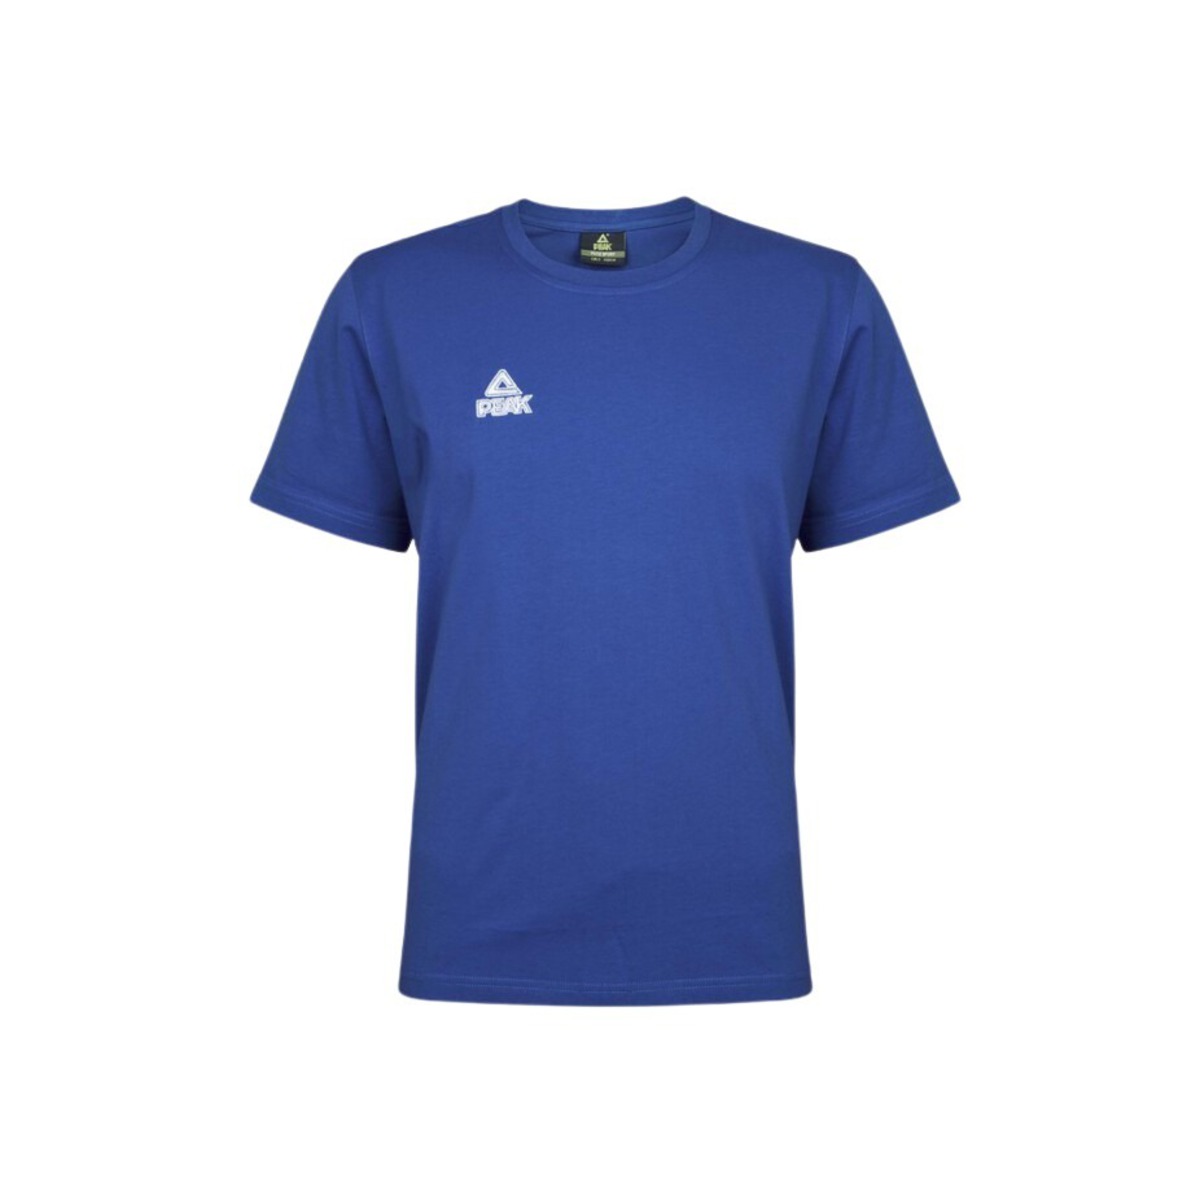 T-shirt Peak Classic - azul - 